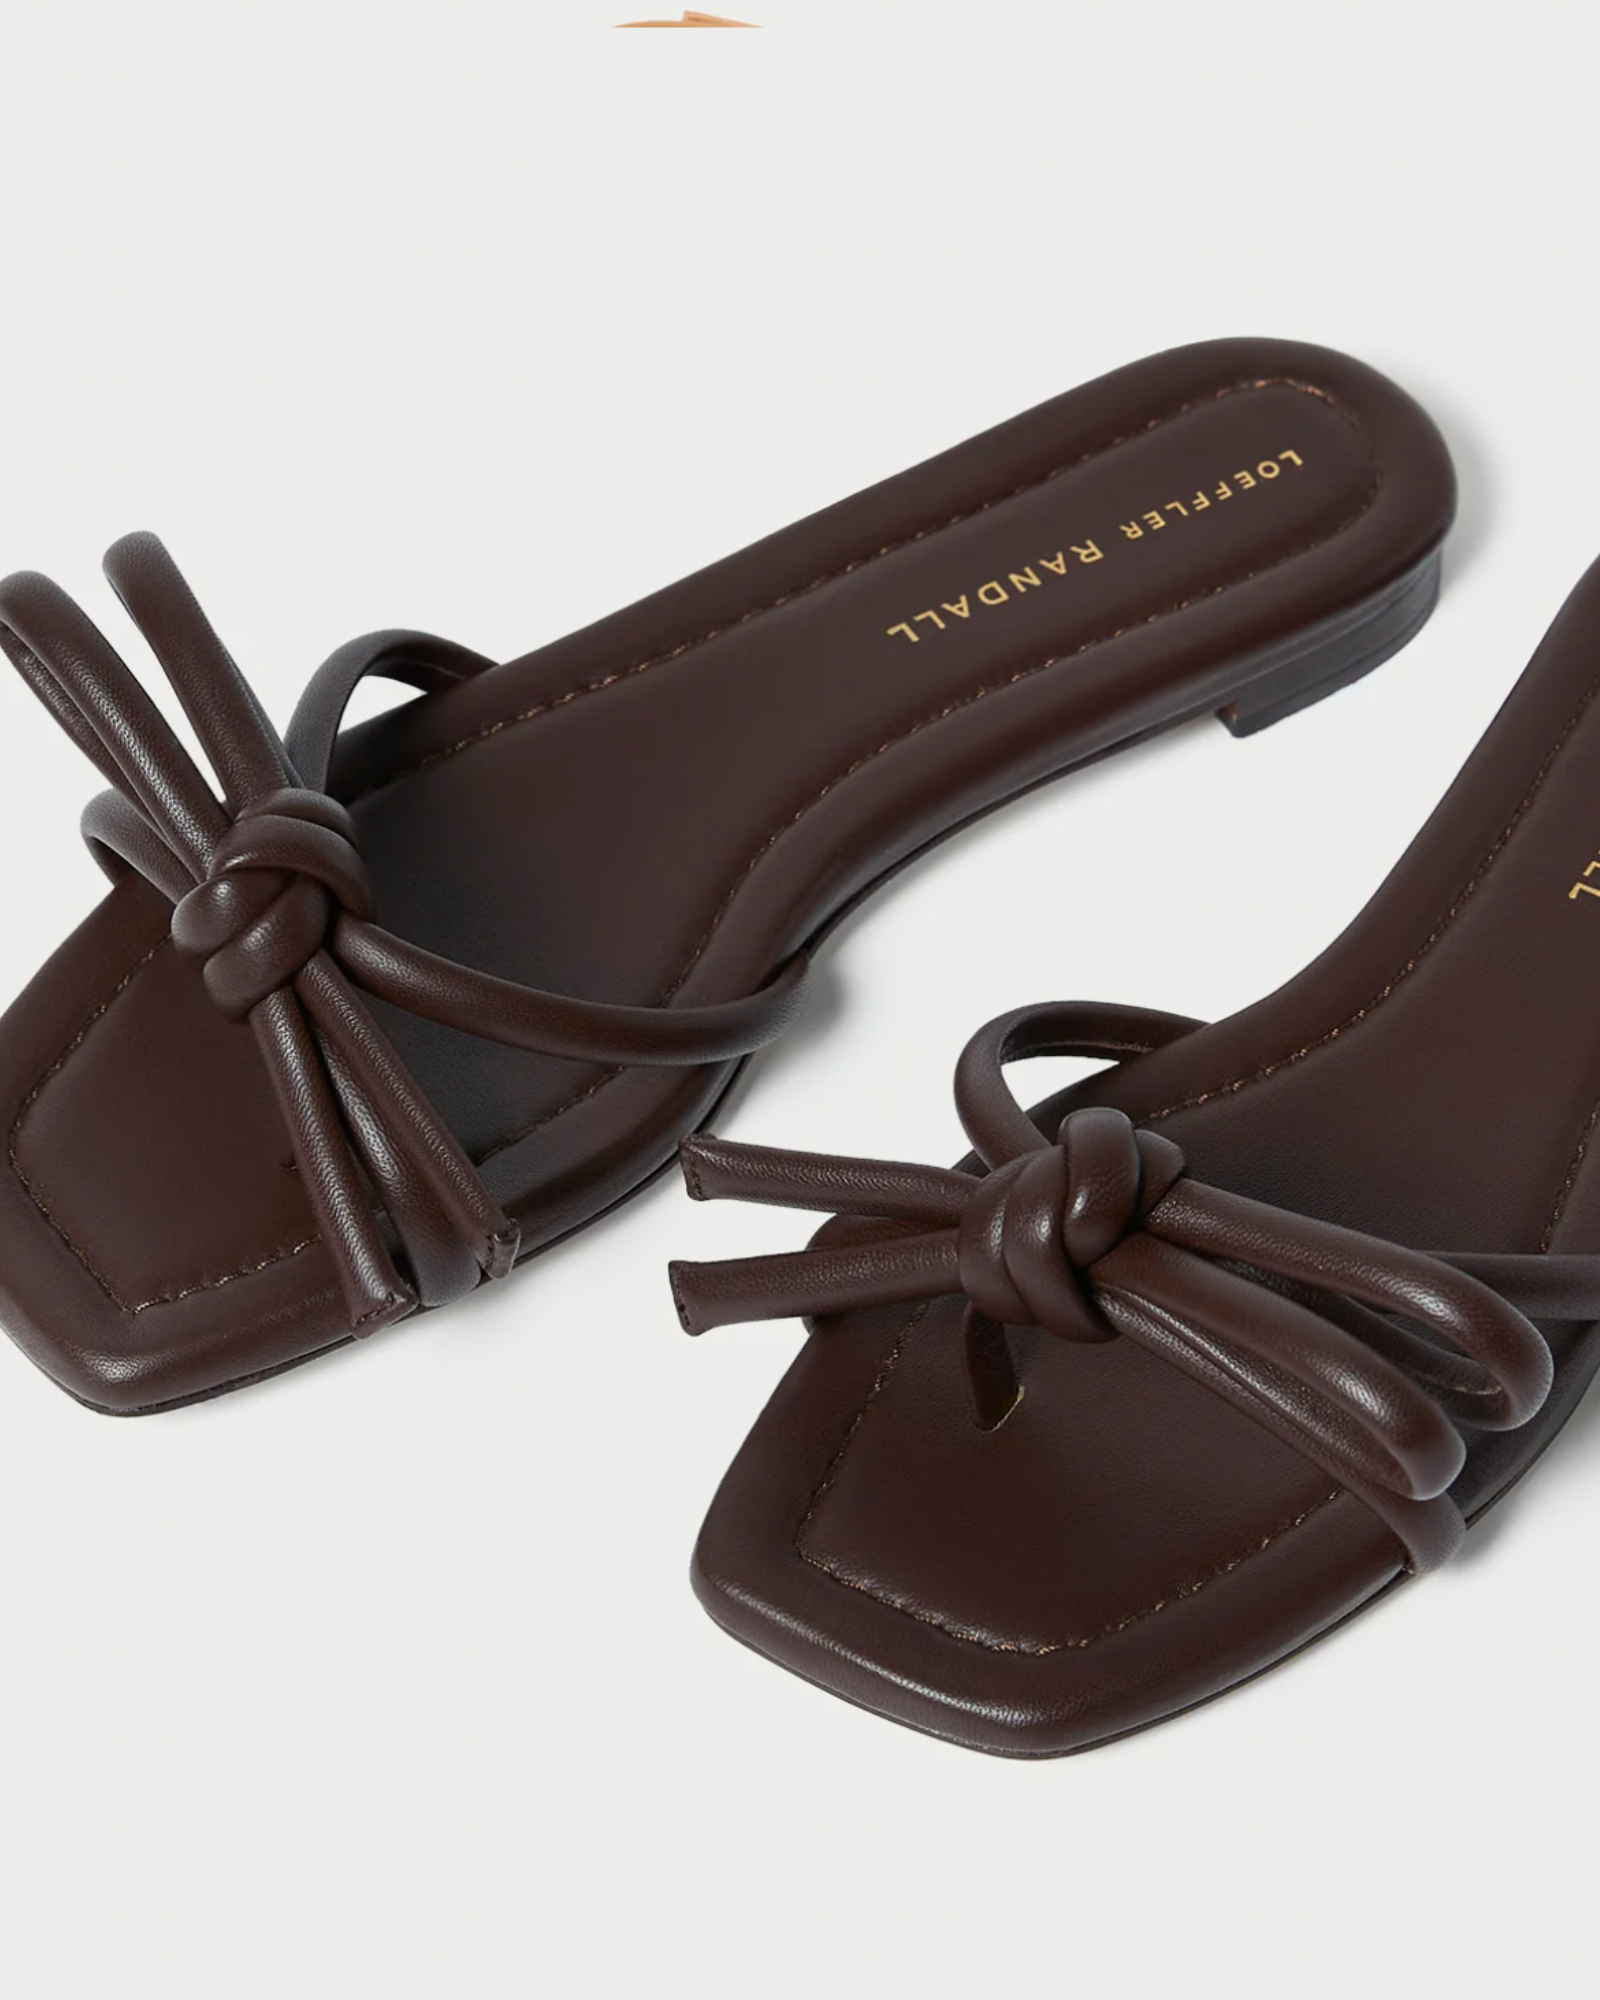 Loeffler Randall Hadley Flat Sandal in Chocolate